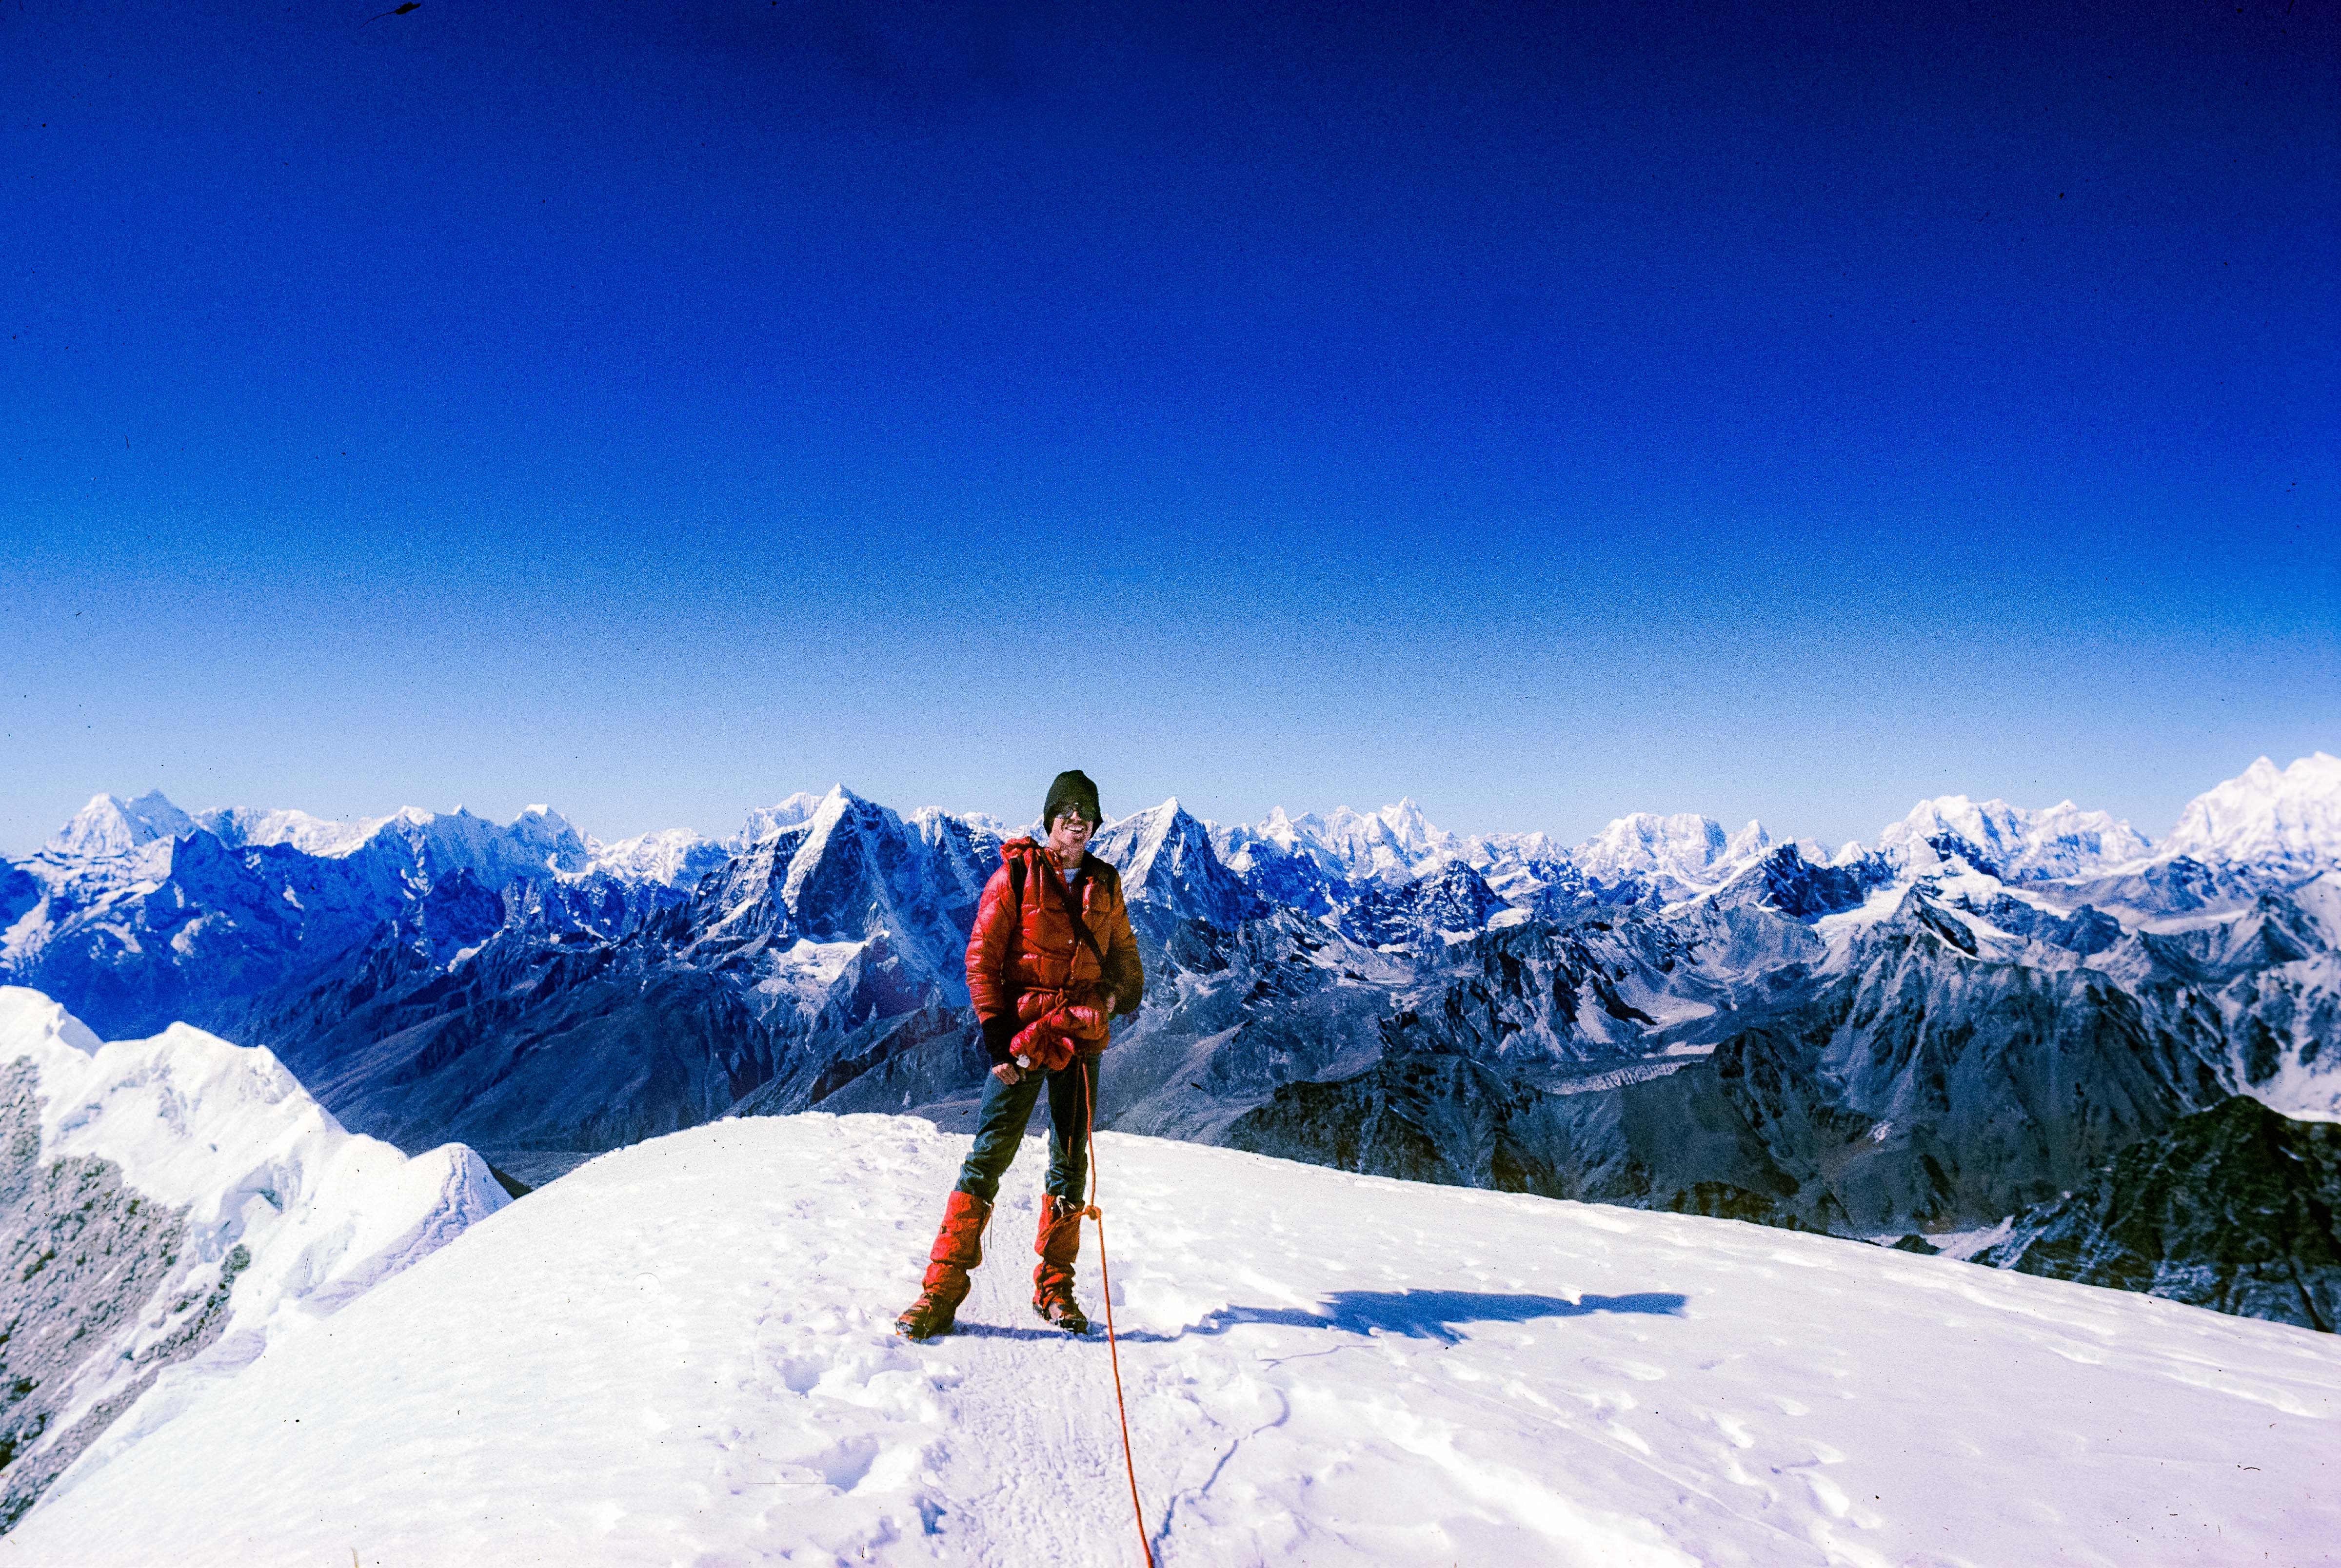 Nepal, Jeff Shea on the Summit of Island Peak, 1983